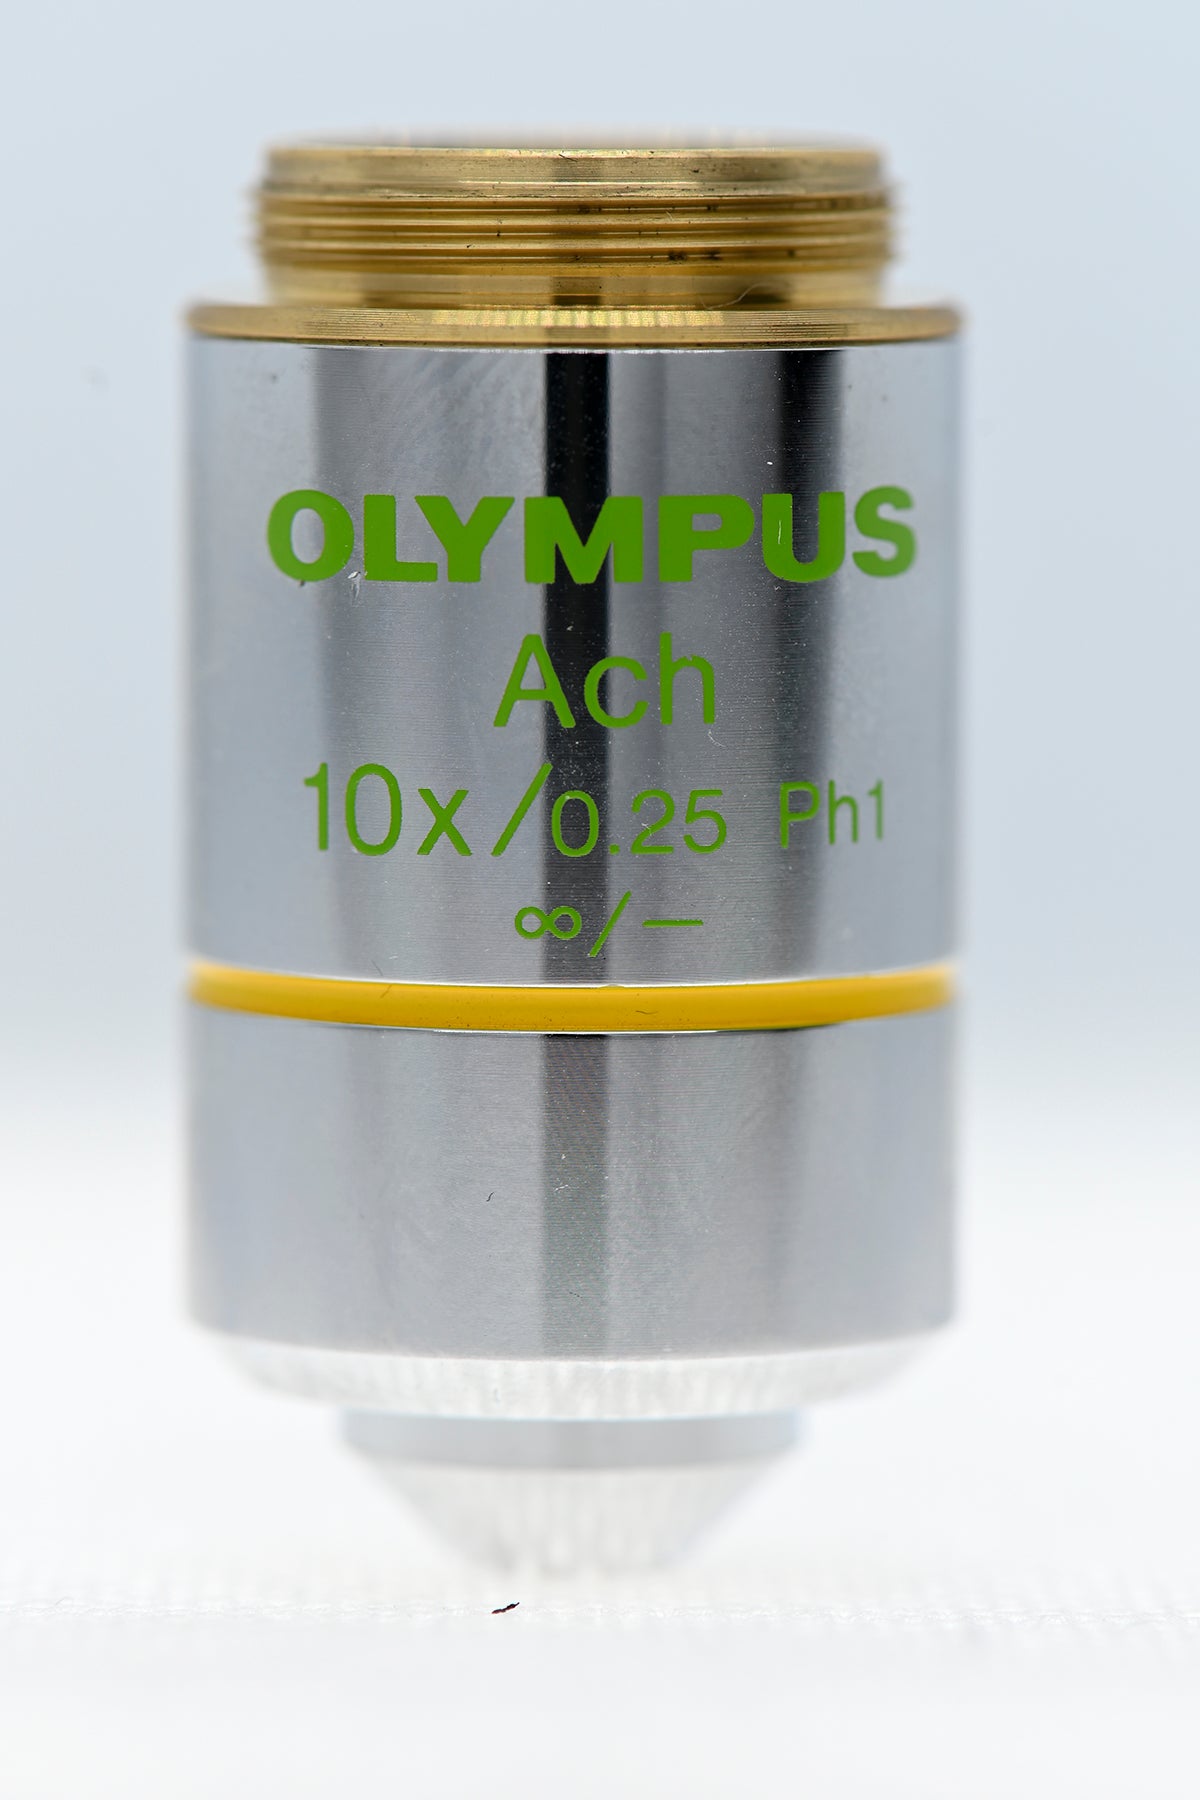 Olympus 10x Phase 1 ACH Objective